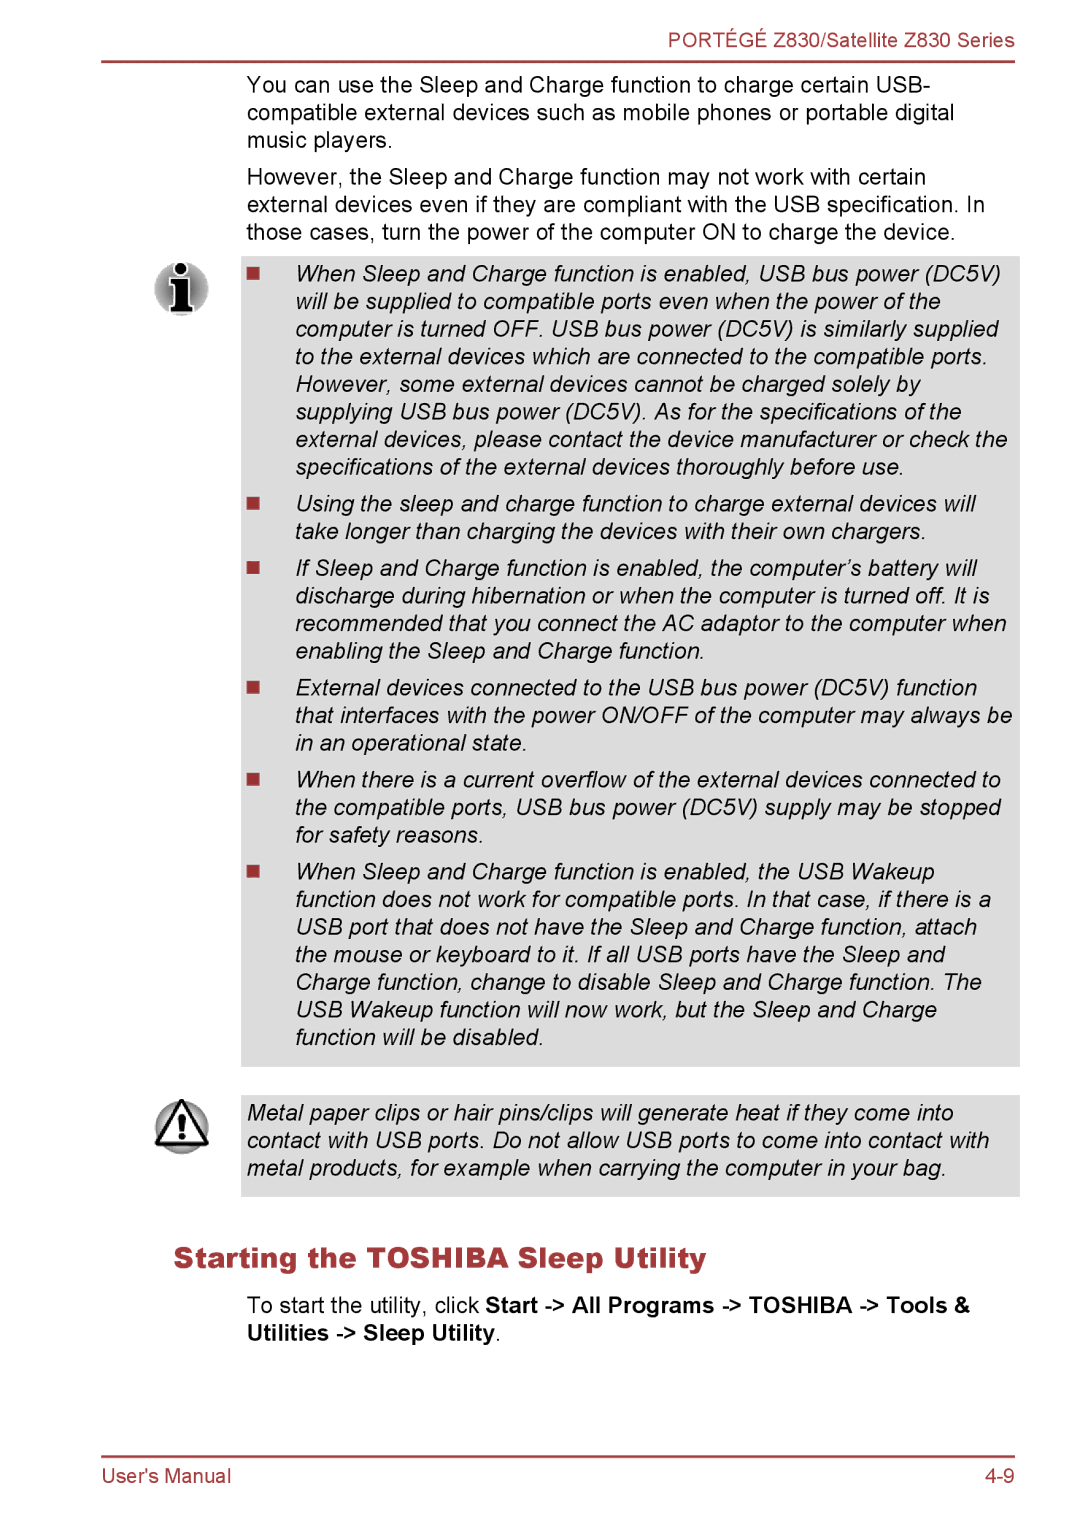 Toshiba Z830 user manual Starting the Toshiba Sleep Utility 